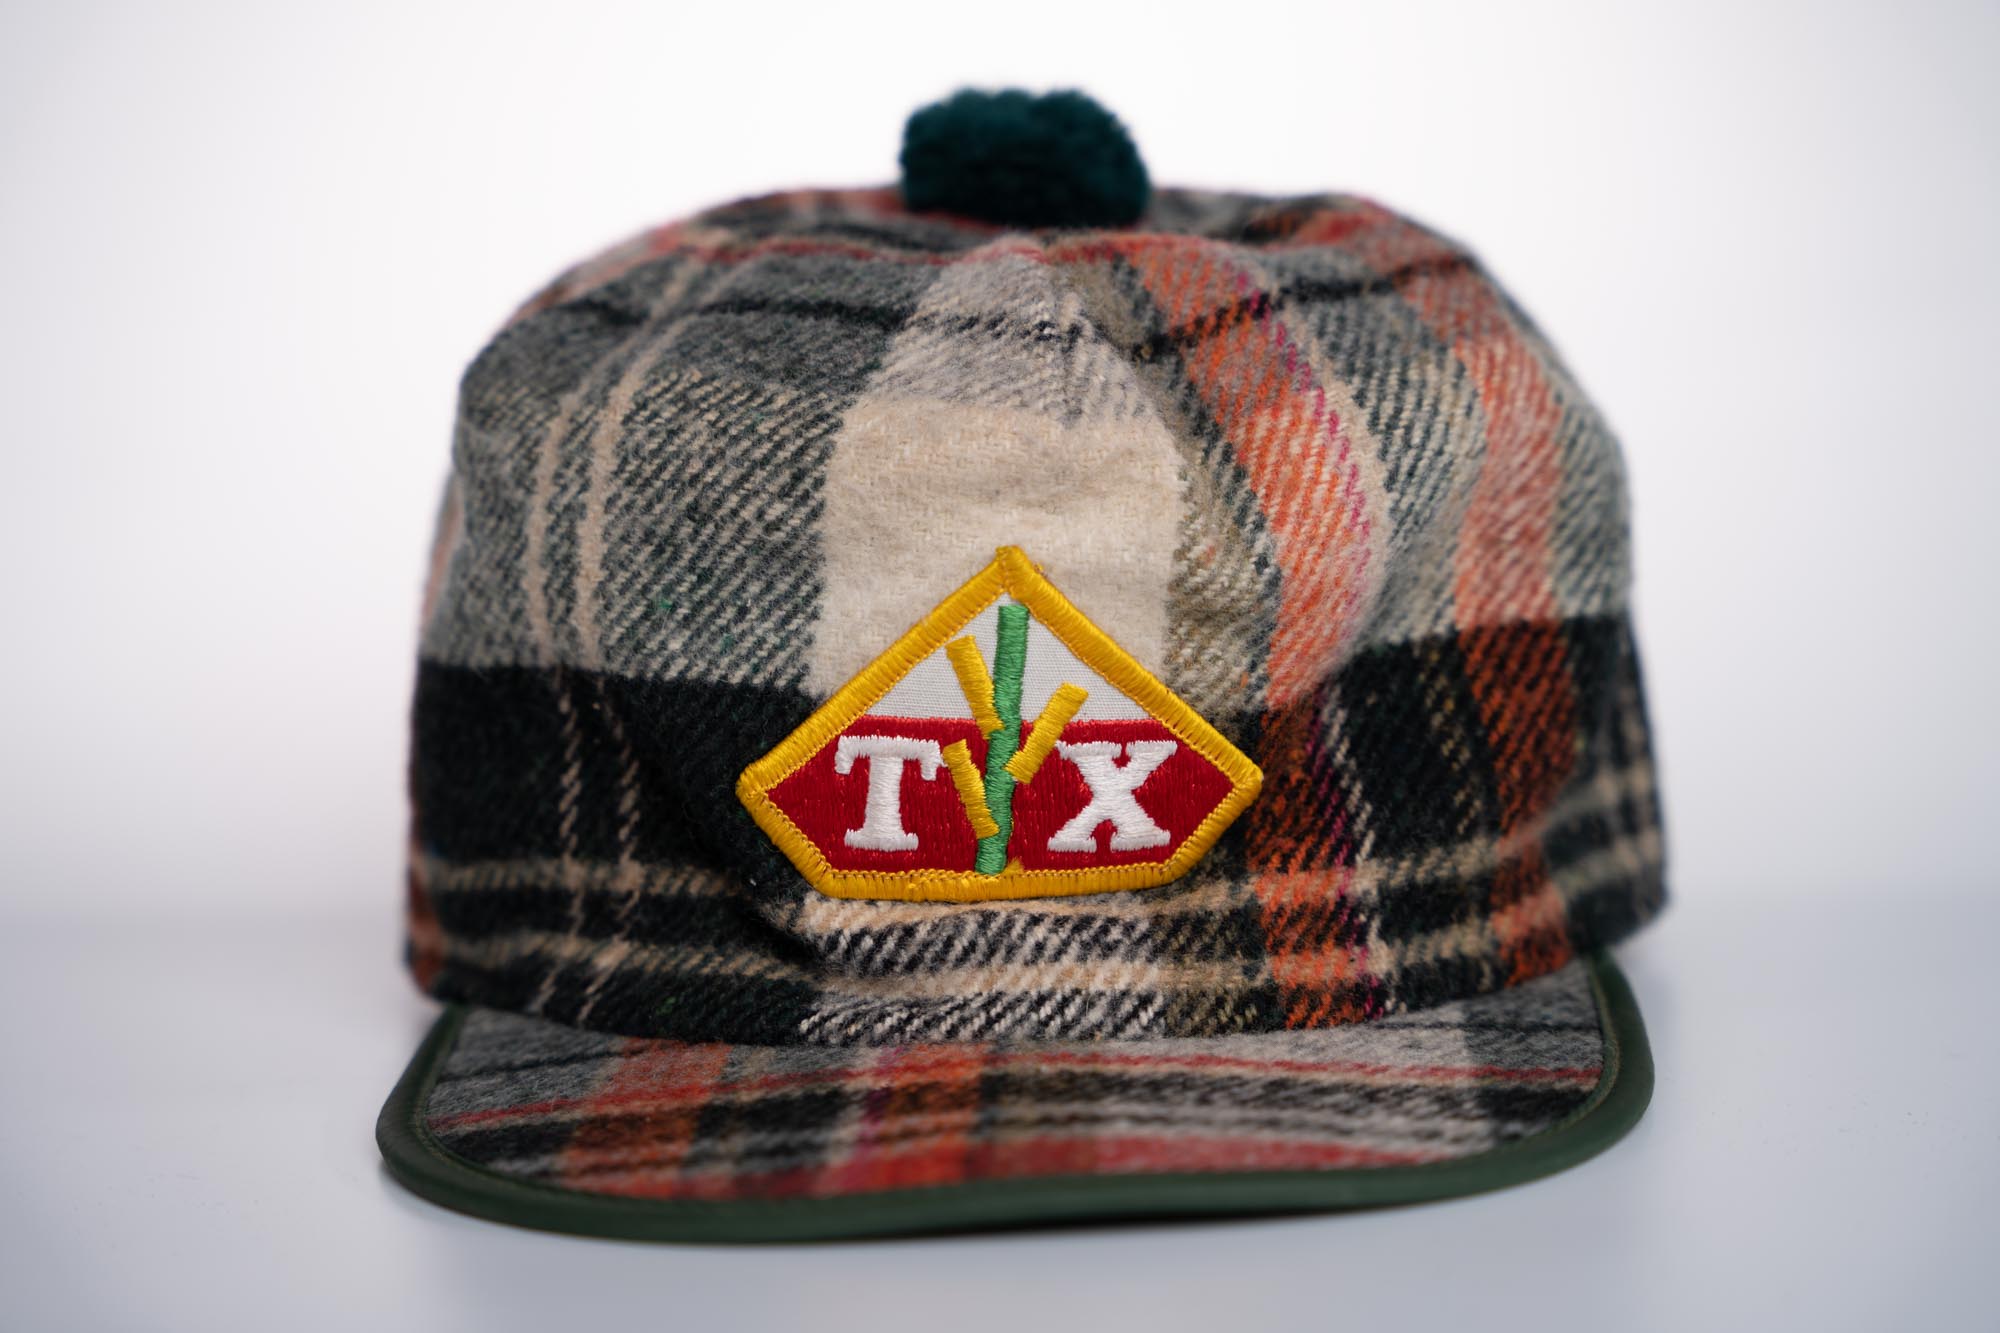 TX Plaid Ear Flap Hat